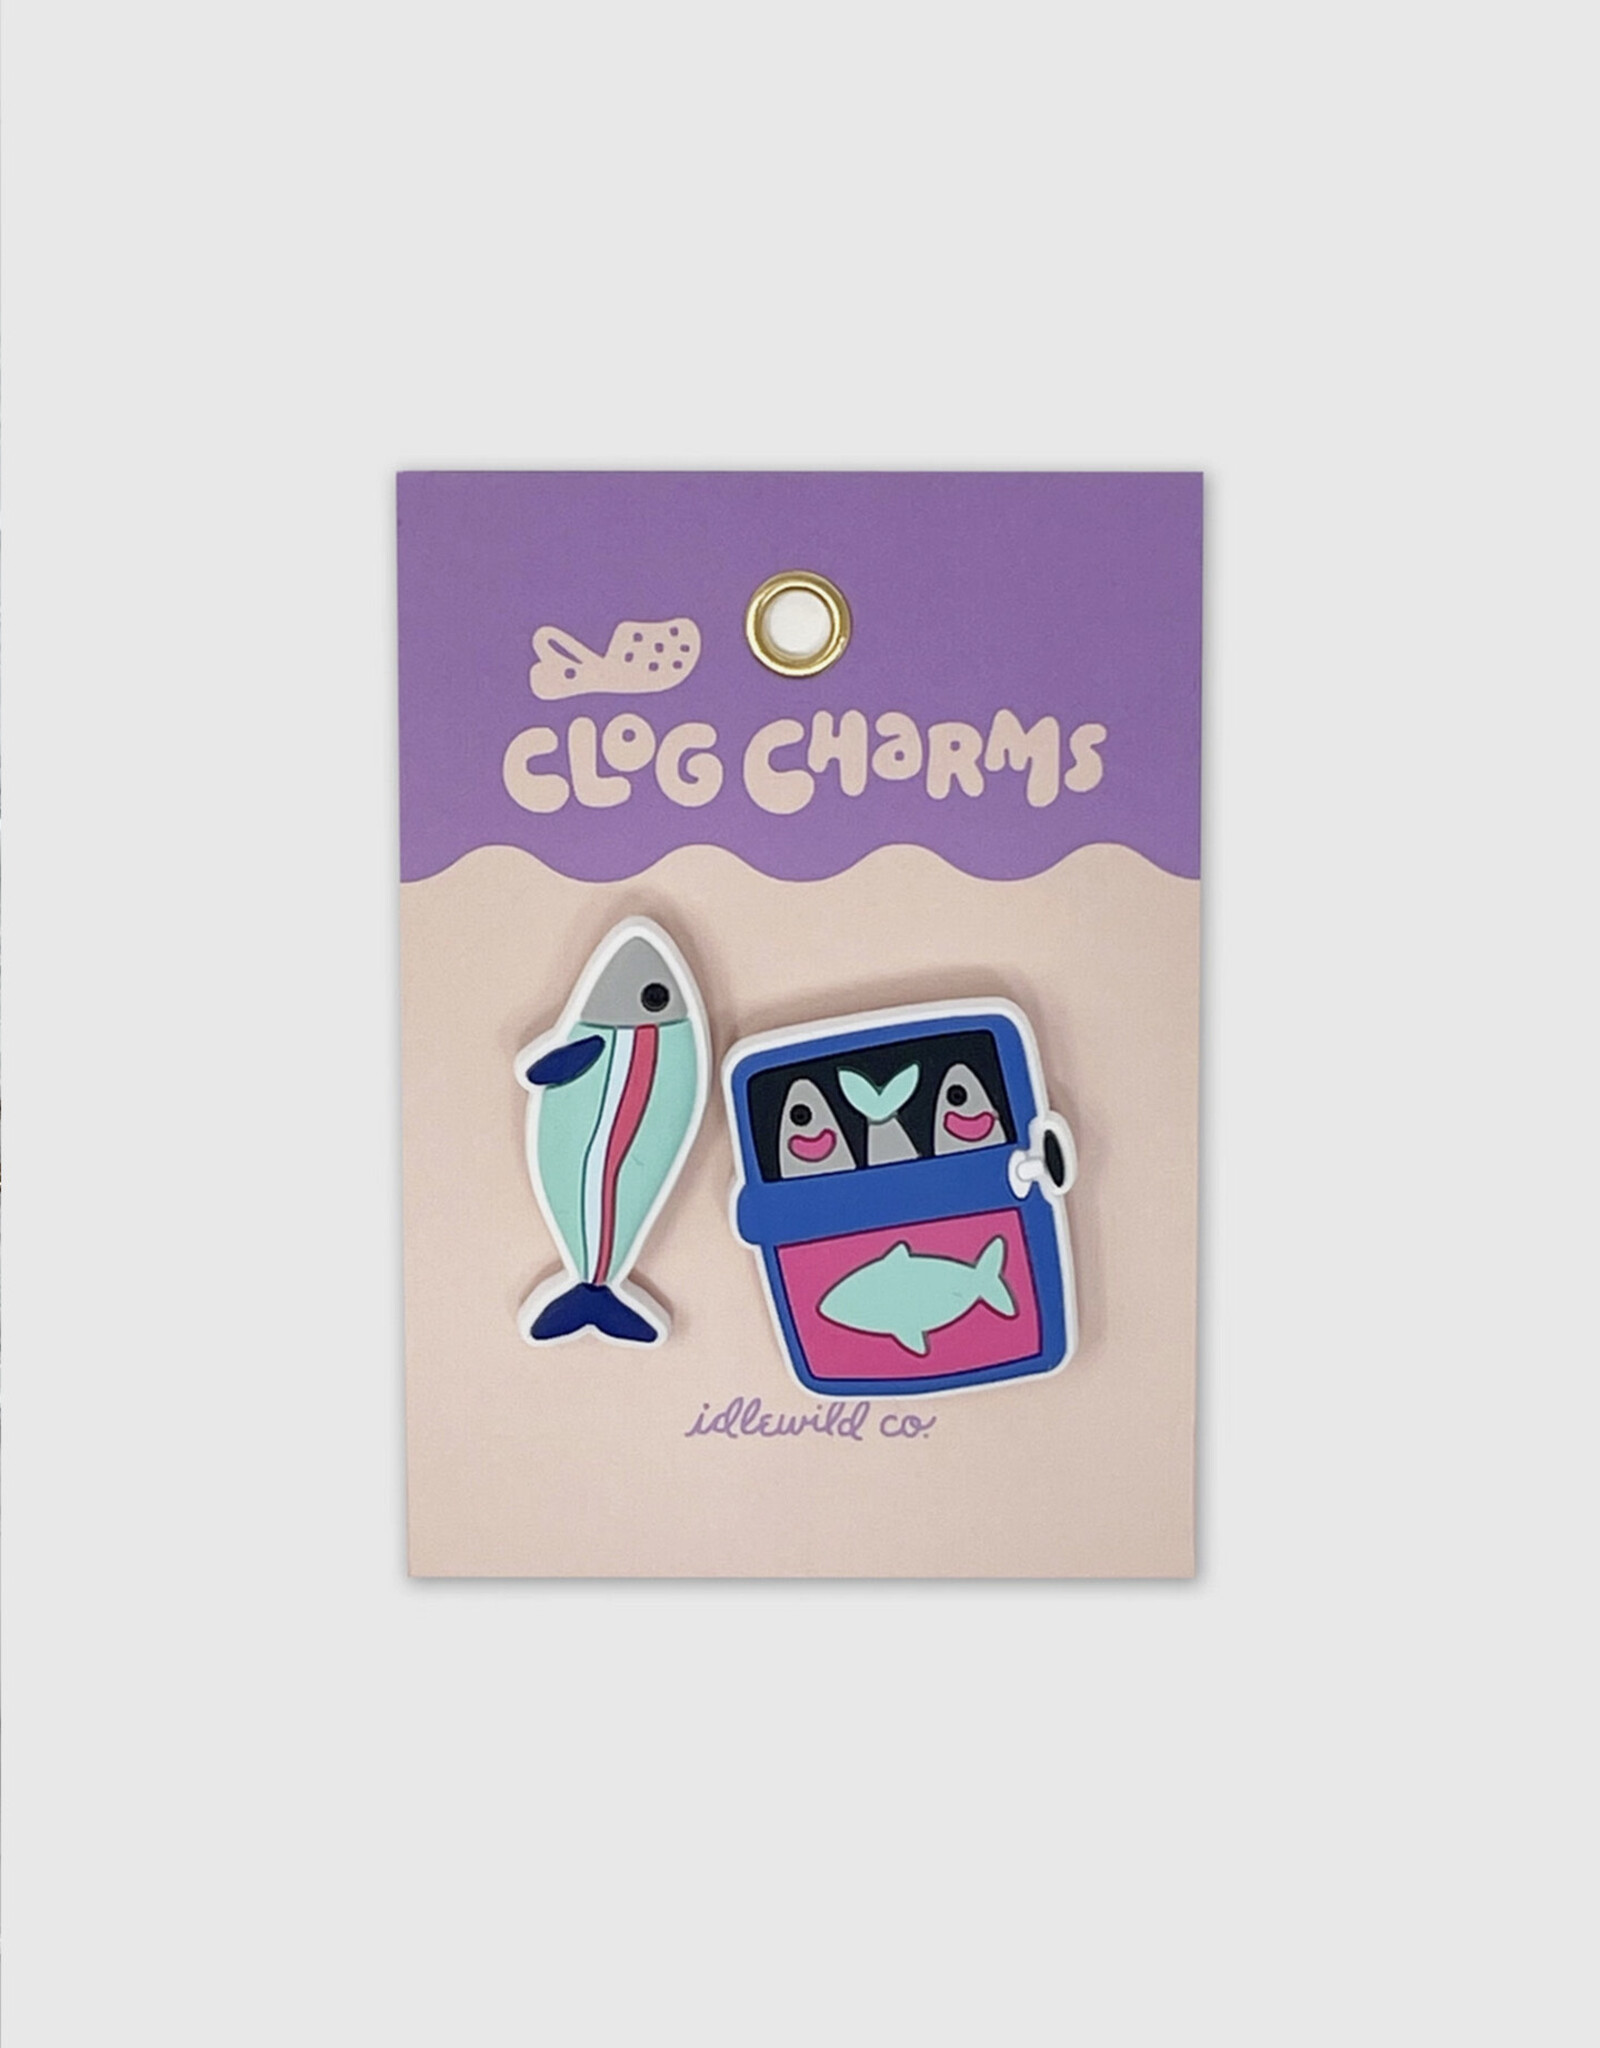 Sardine Clog Charms